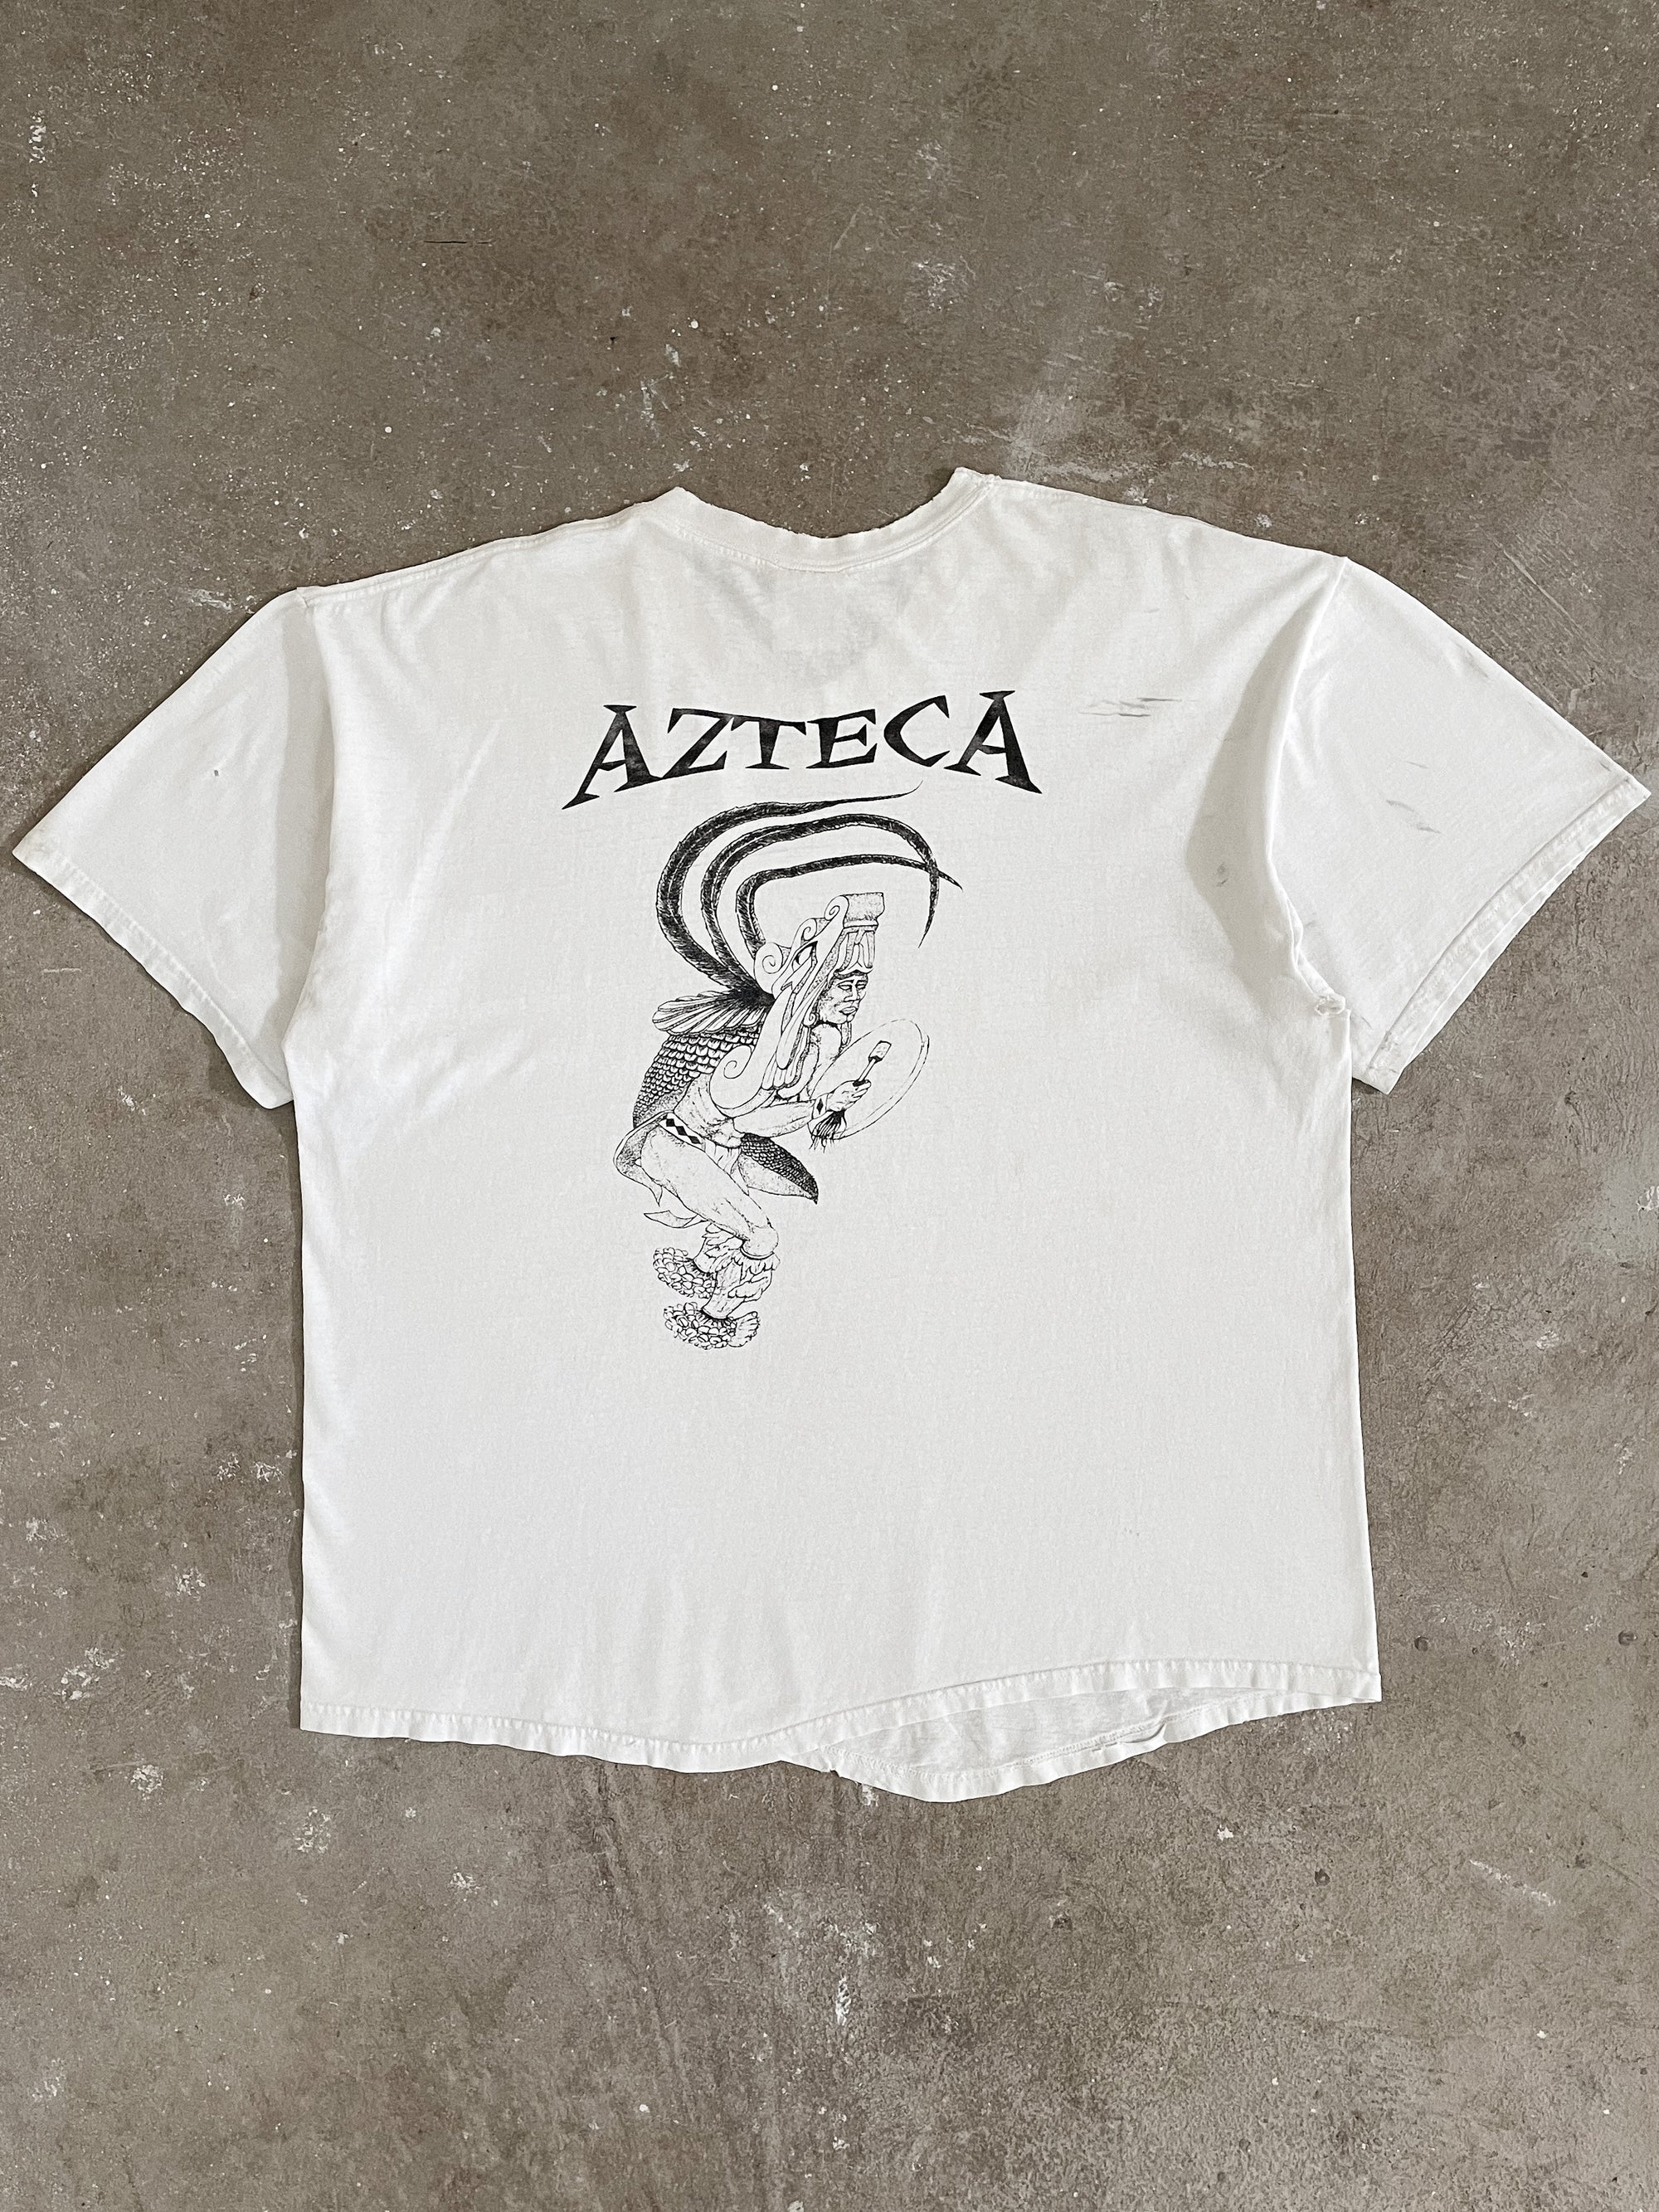 1990s “Azteca” Distressed Tee (XL)